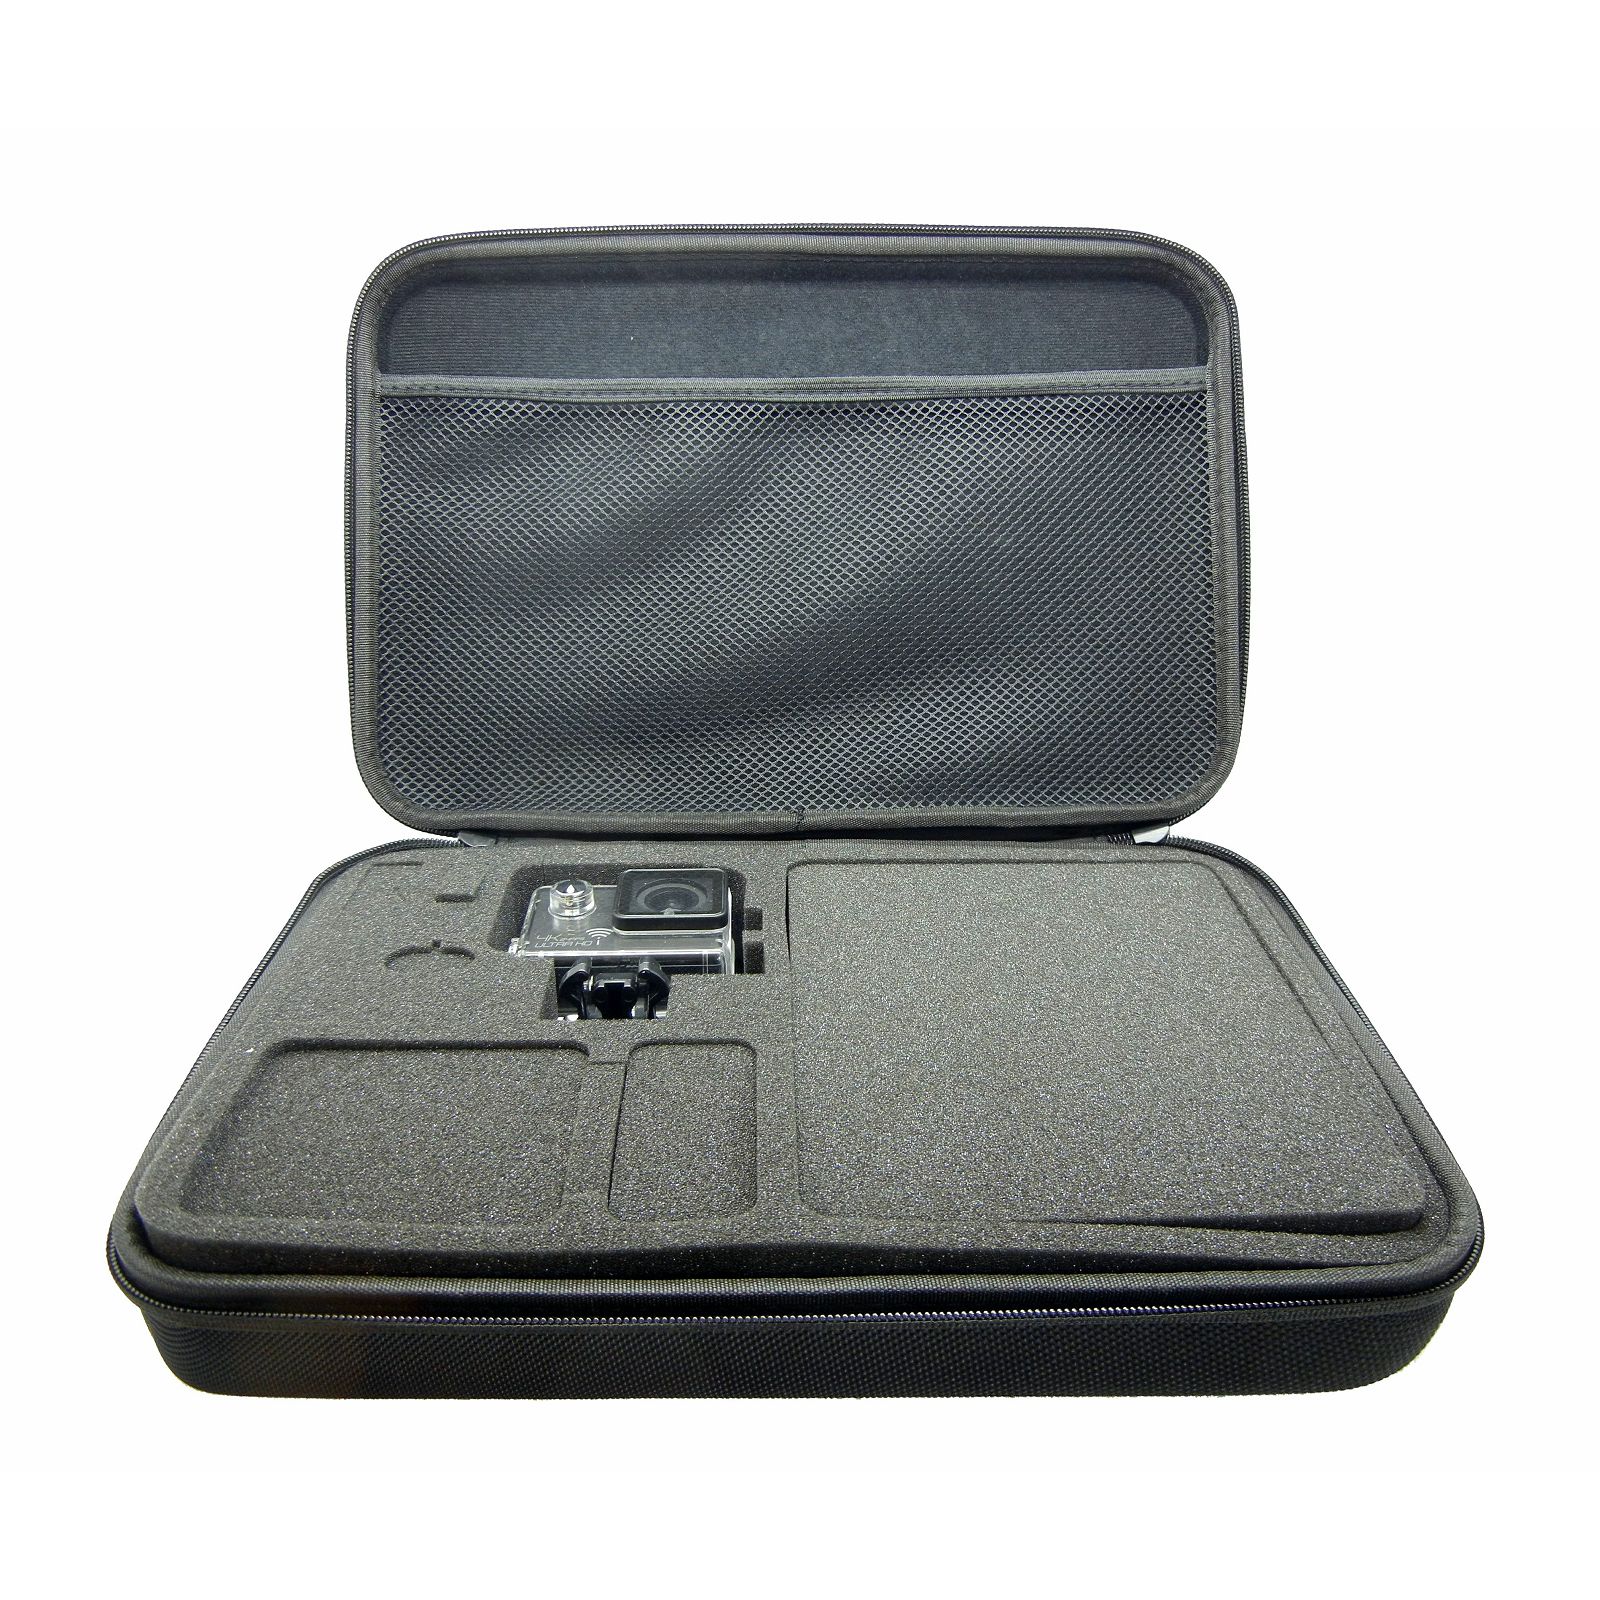 GoXtreme Hardshell Protection Case Big size Large L velika torbica za akcijske sportske kamere i dodatnu opremu (55500)